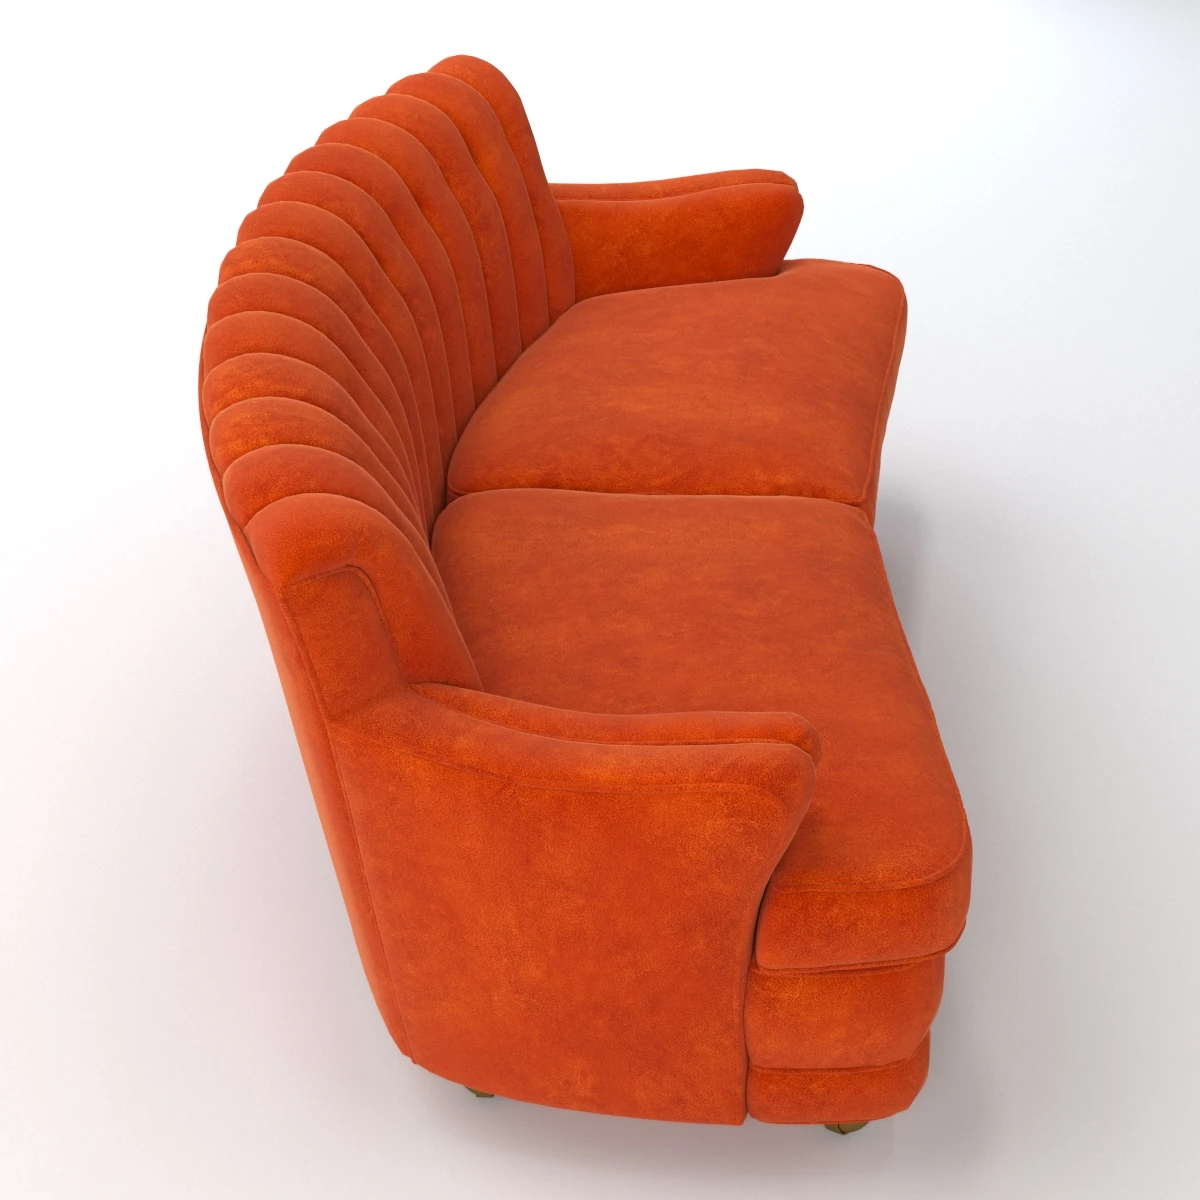 Vintage Couch Furniture Retro Orange Couch 3D Model_03